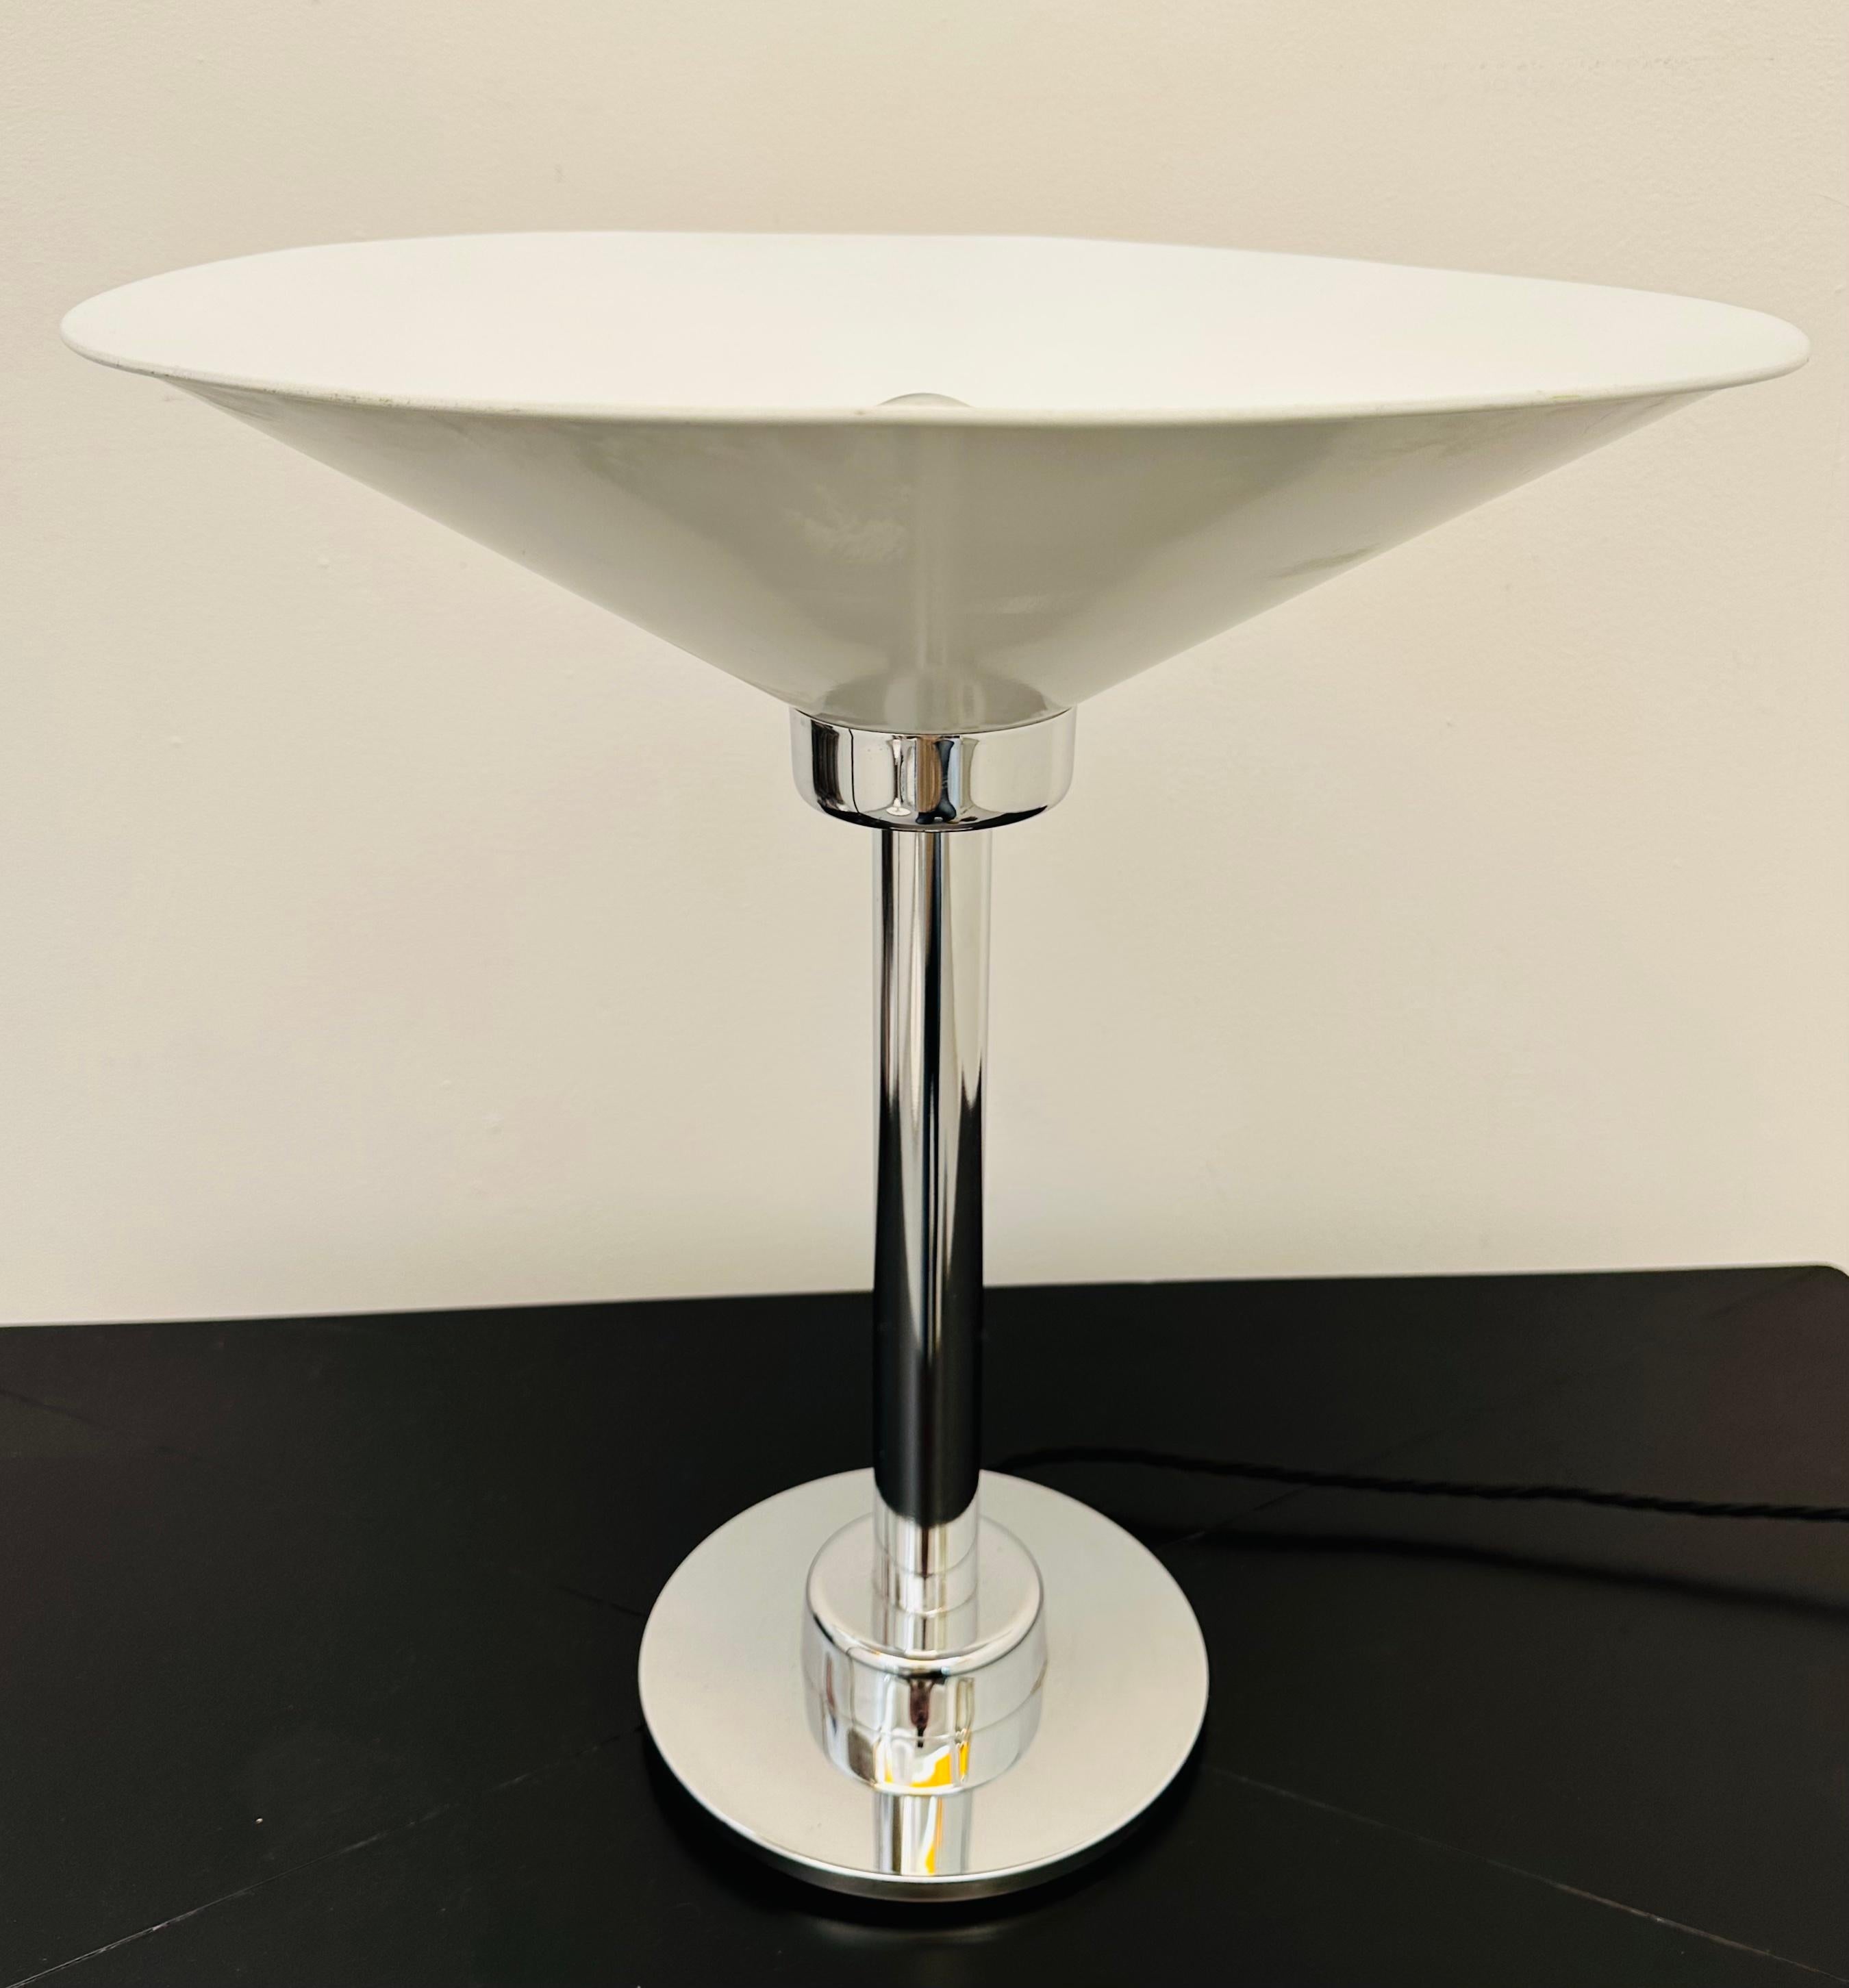 1970s Italian Conical Enamelled White Metal & Chrome Uplighter Table Lamp For Sale 6